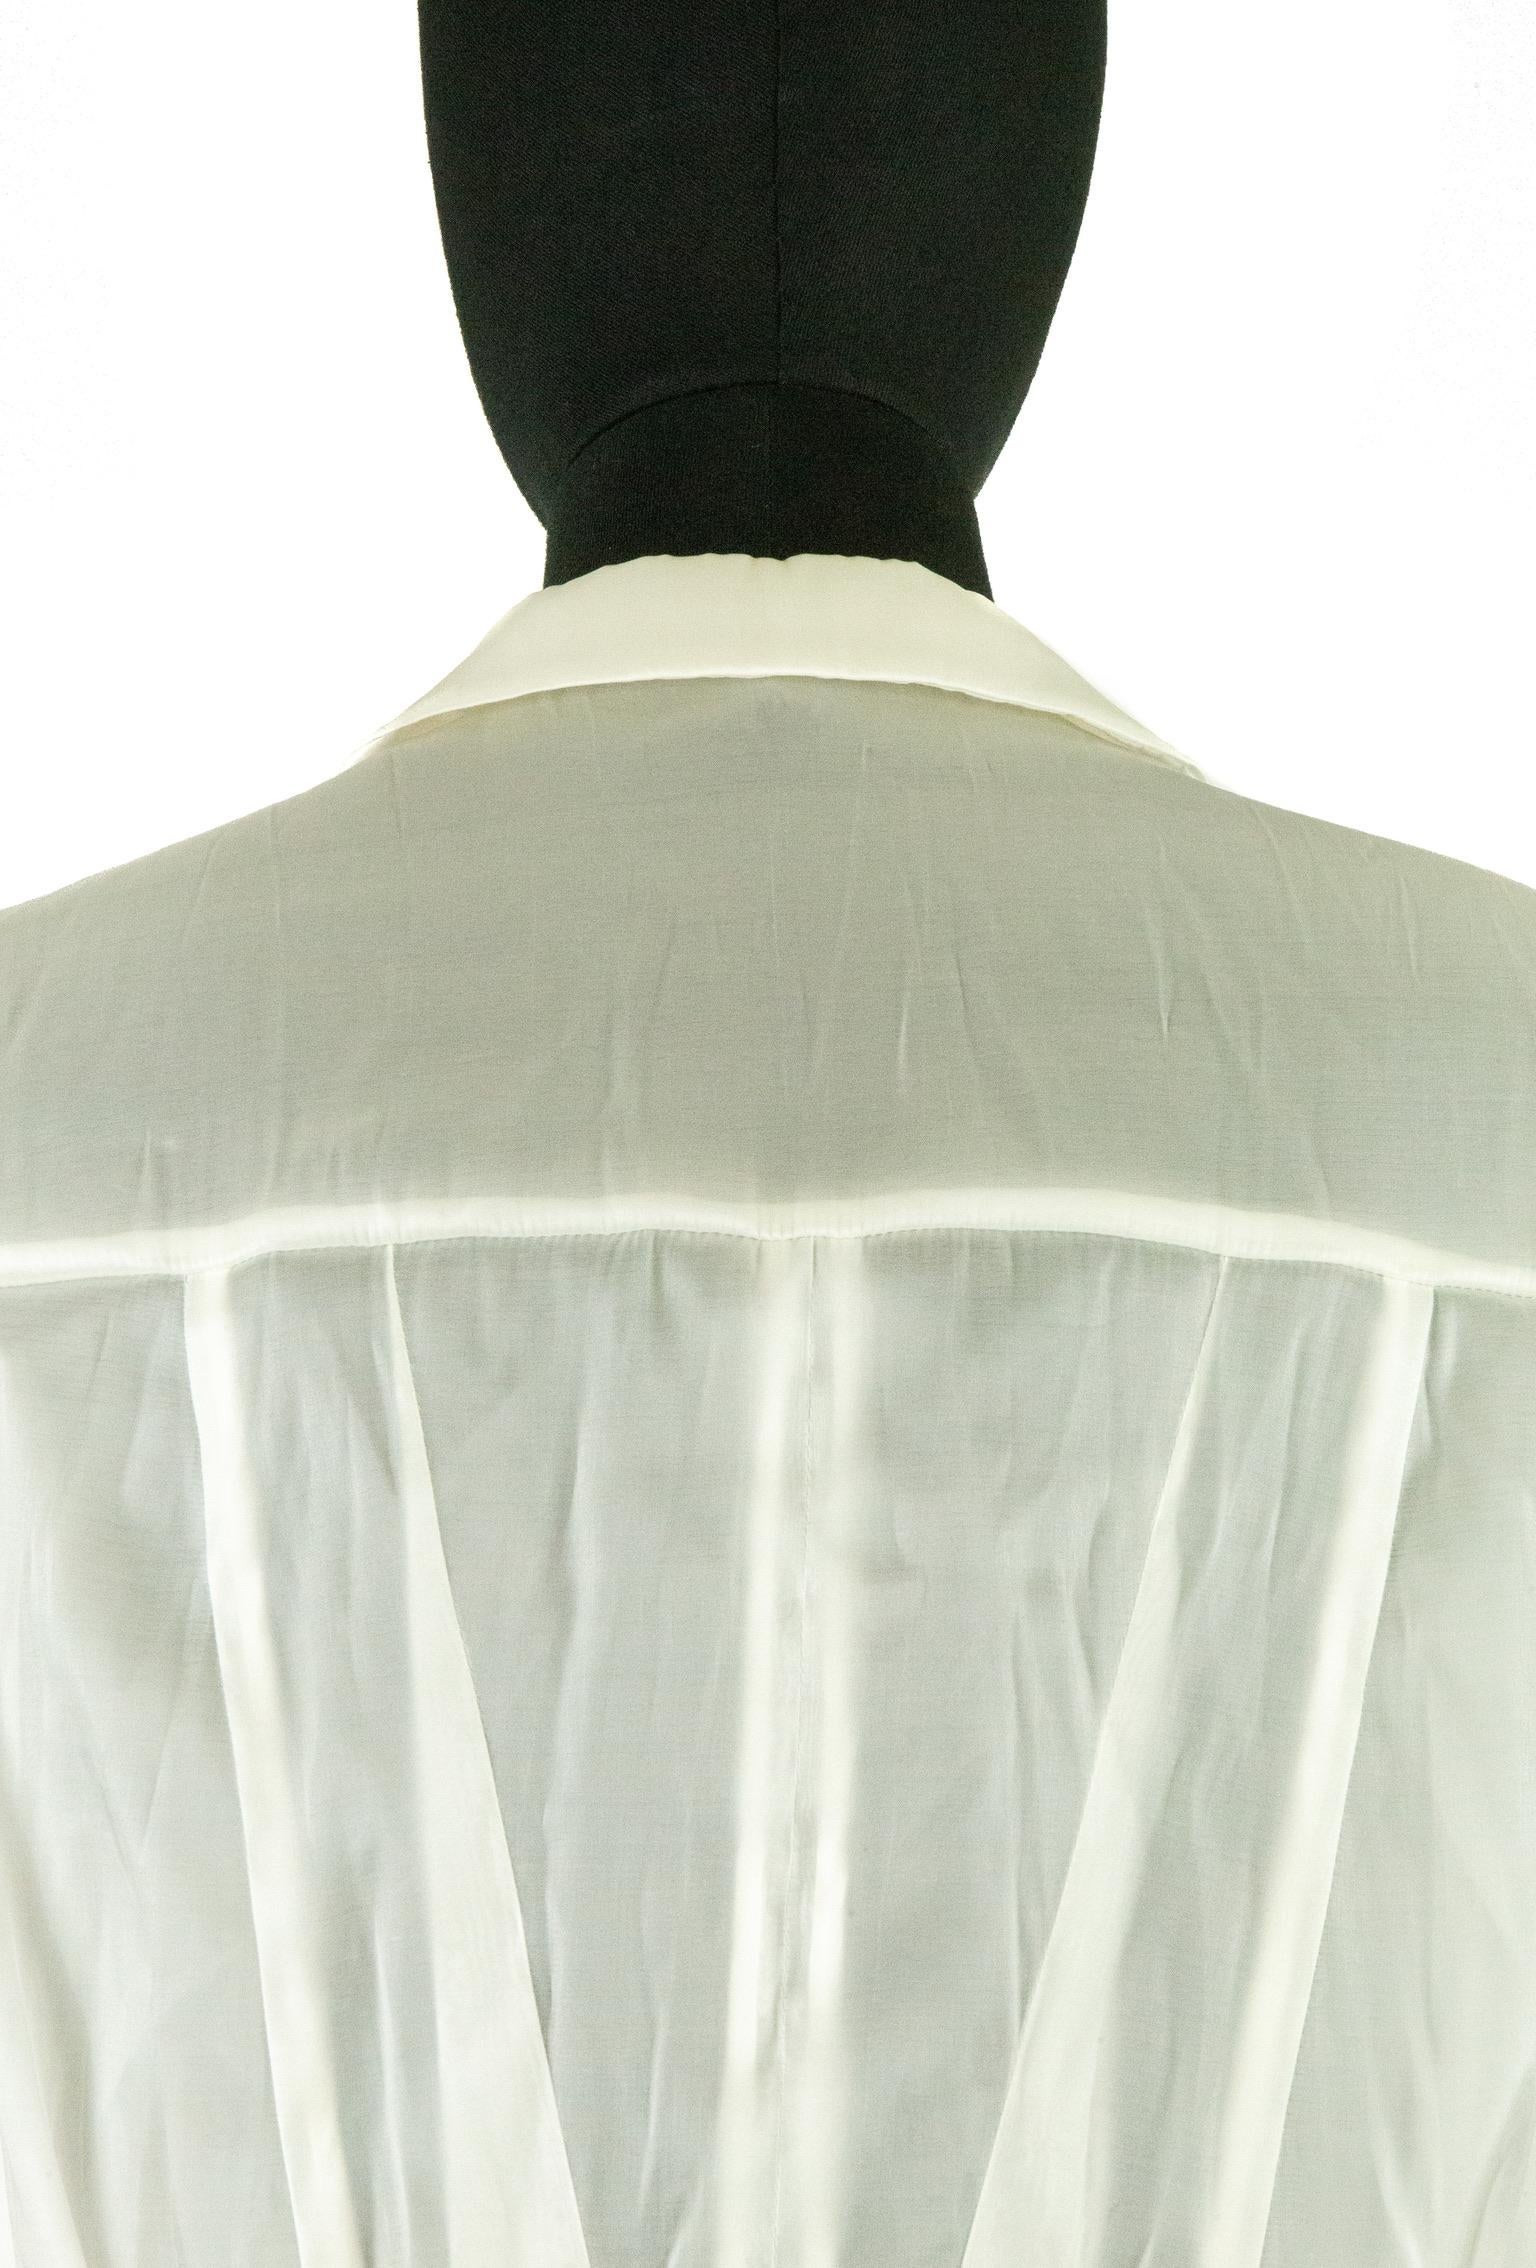 2008 Marc Jacobs for Louis Vuitton Shirt Dress For Sale 1